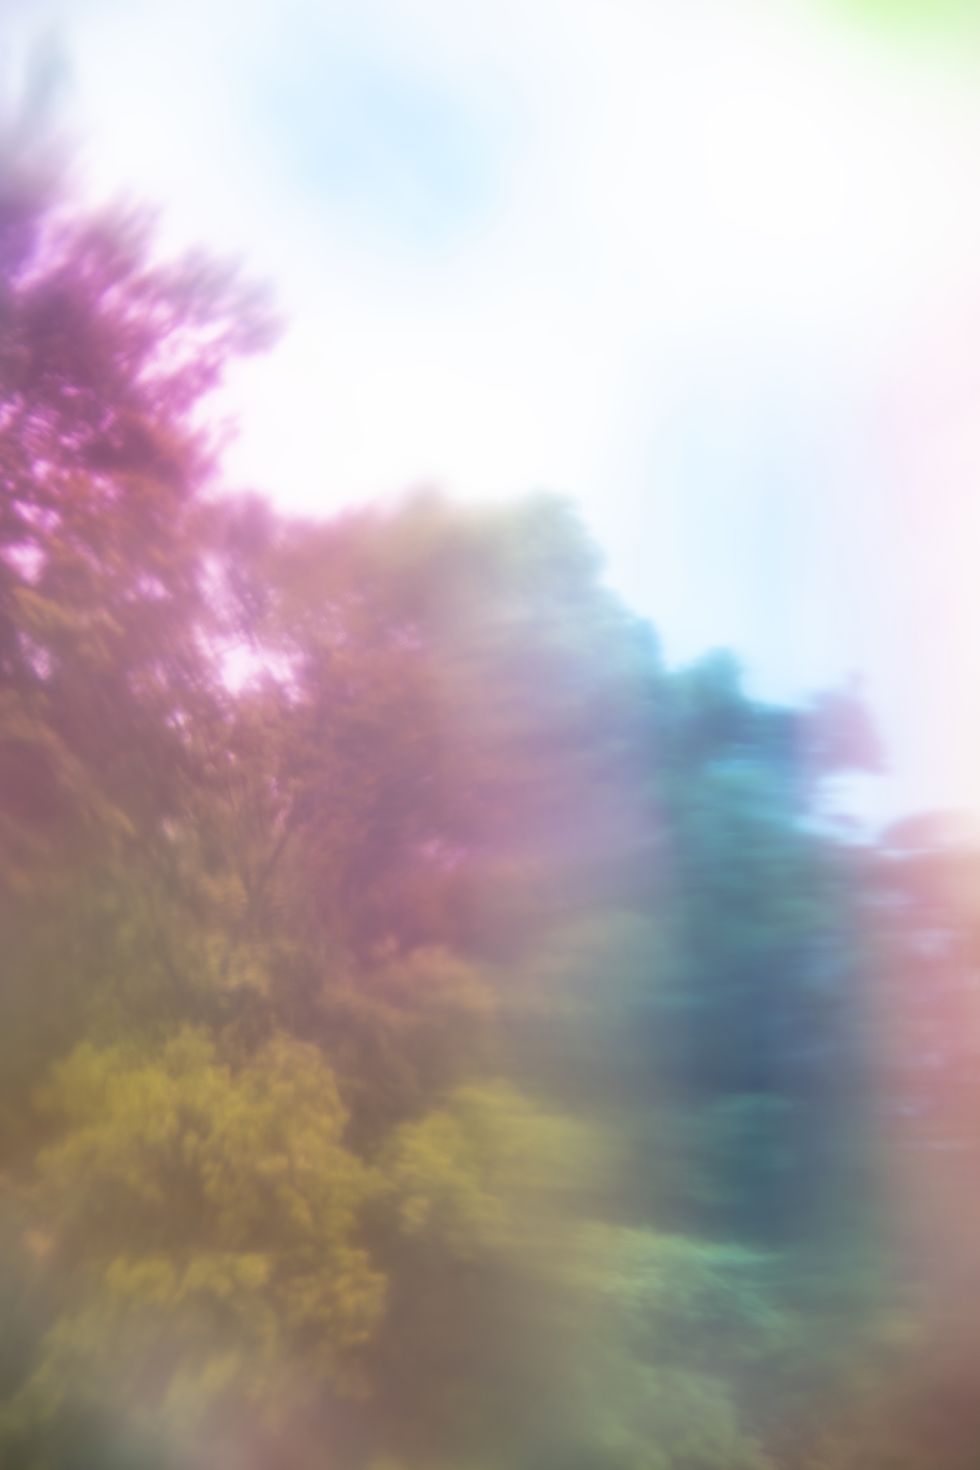 rinko kawauchi, christophe guye galerie, rinko kawauchi, from the series me, alberi, arcobaleno, fotografia, ﻿a faraway shining star, twinkling in hand, ﻿fotografiska stockholm